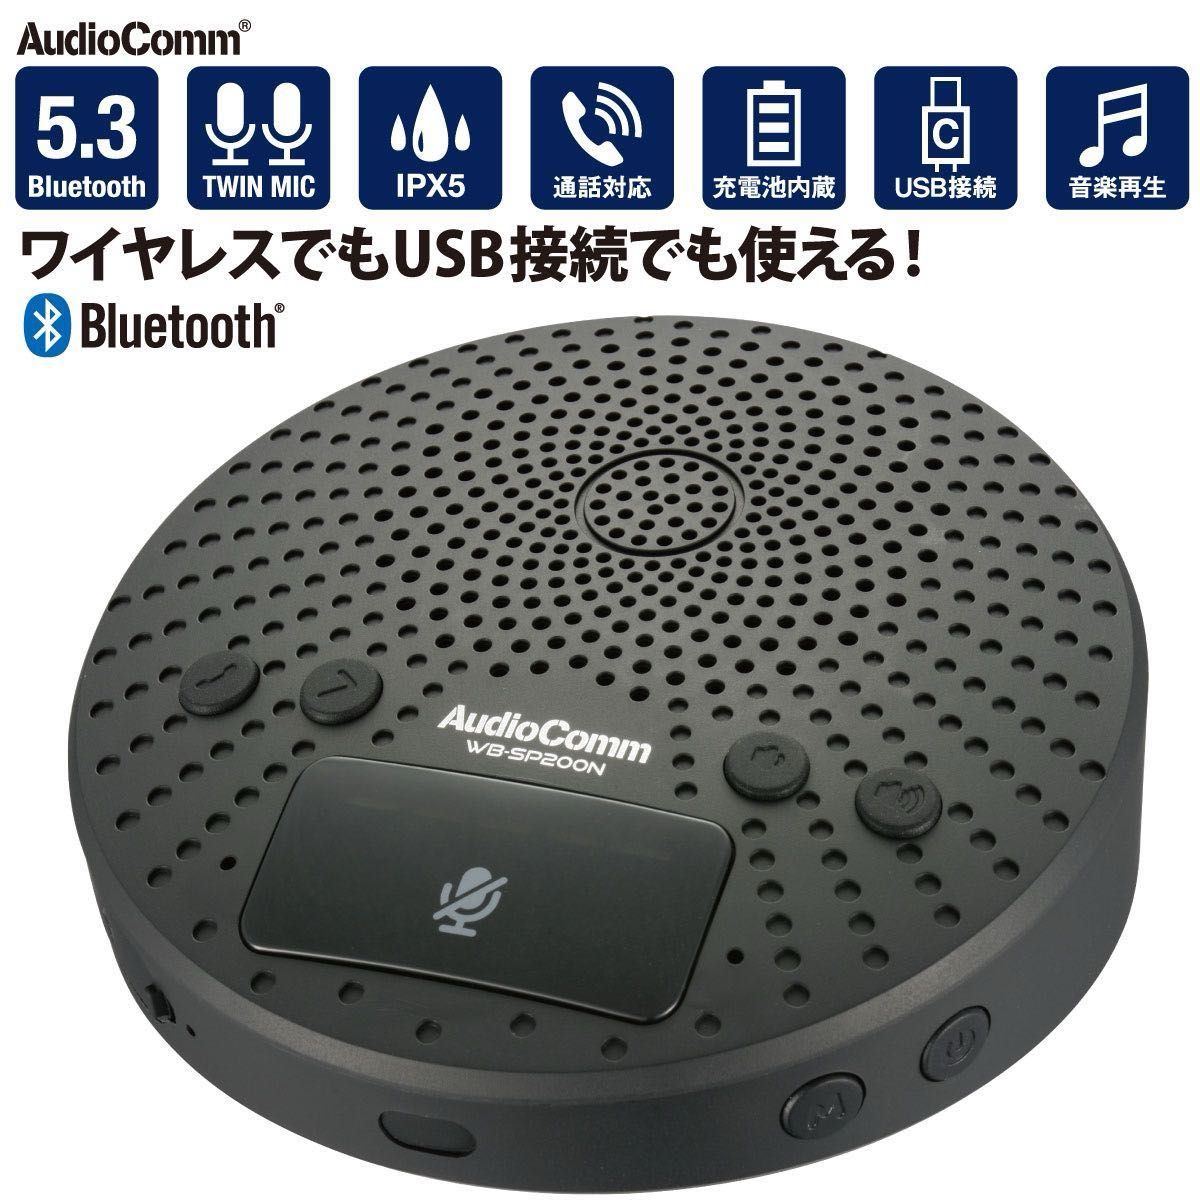 AudioComm WEB会議用スピーカーフォン｜WB-SP200N 03-1670 オーム電機